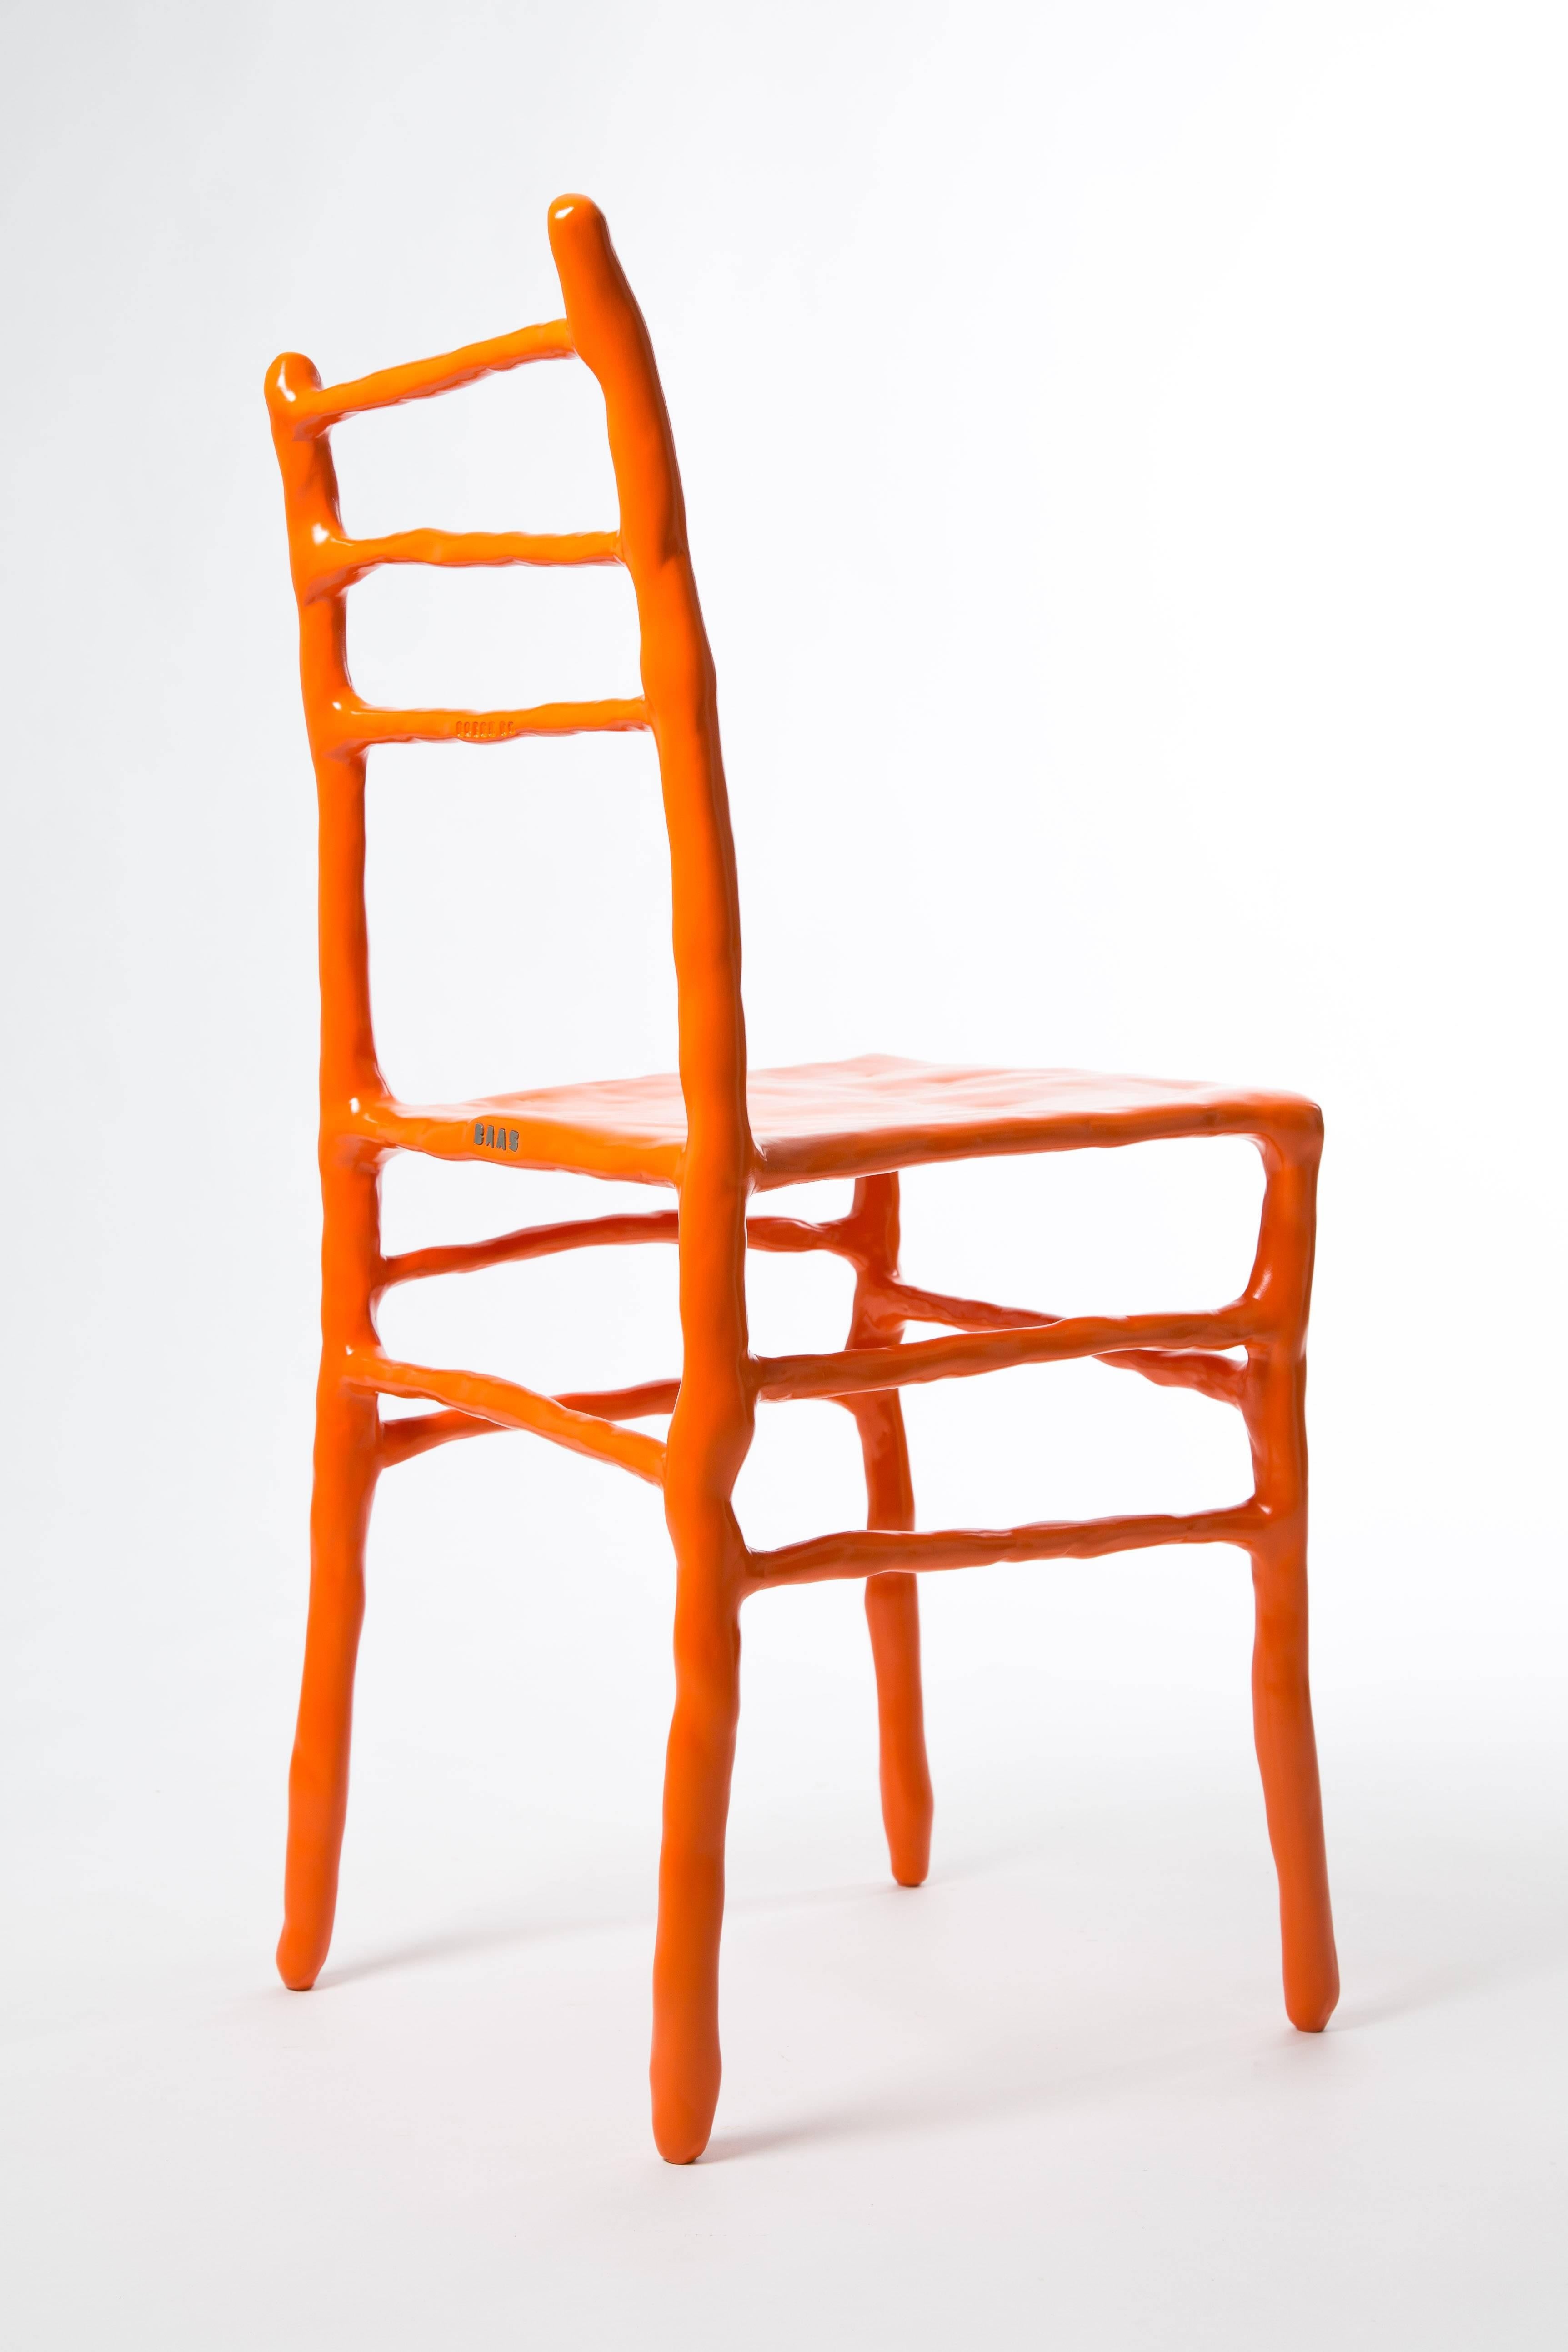 Steel Maarten Baas Clay Chair Limited Edition Basel Chair 2007 Orange For Sale